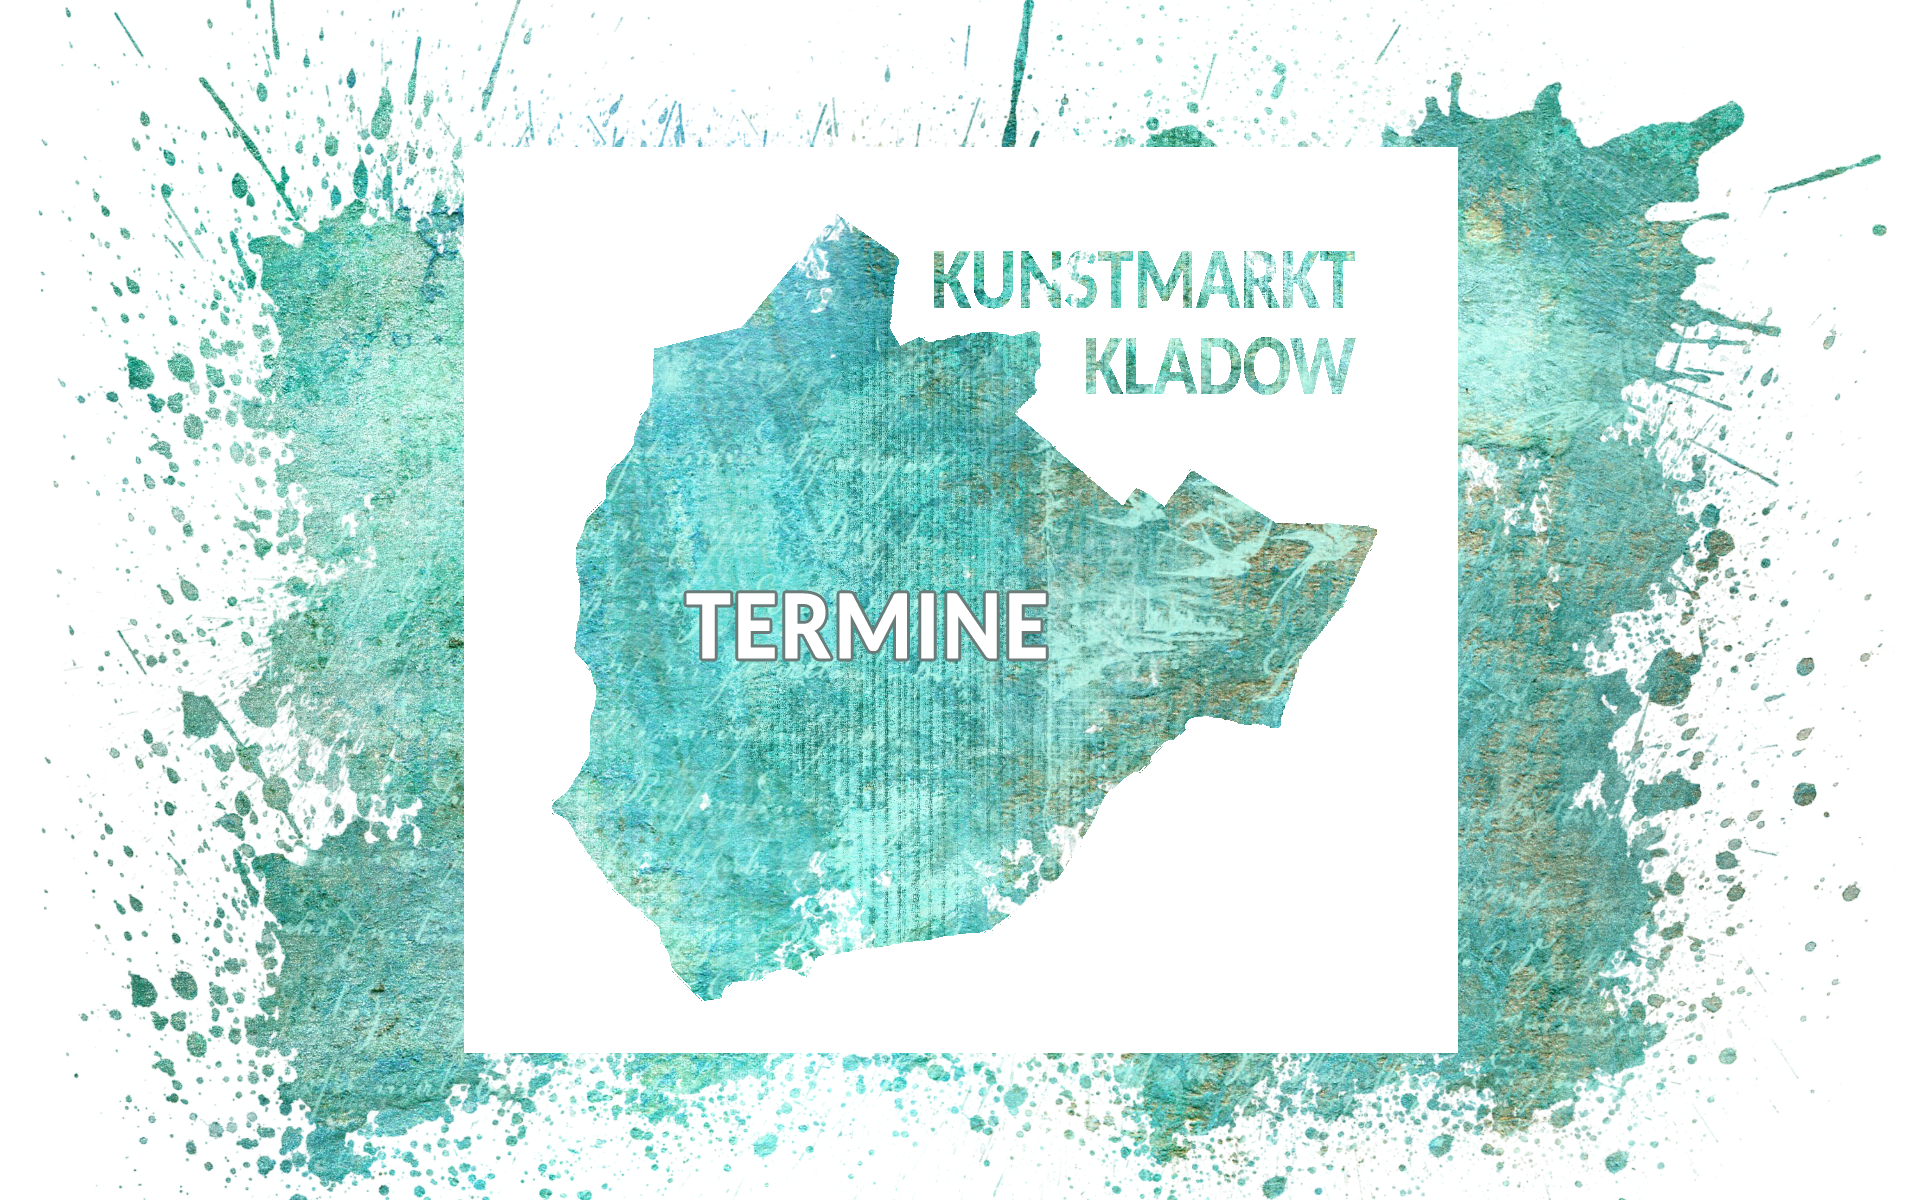 Kunstmark Kladow Termine